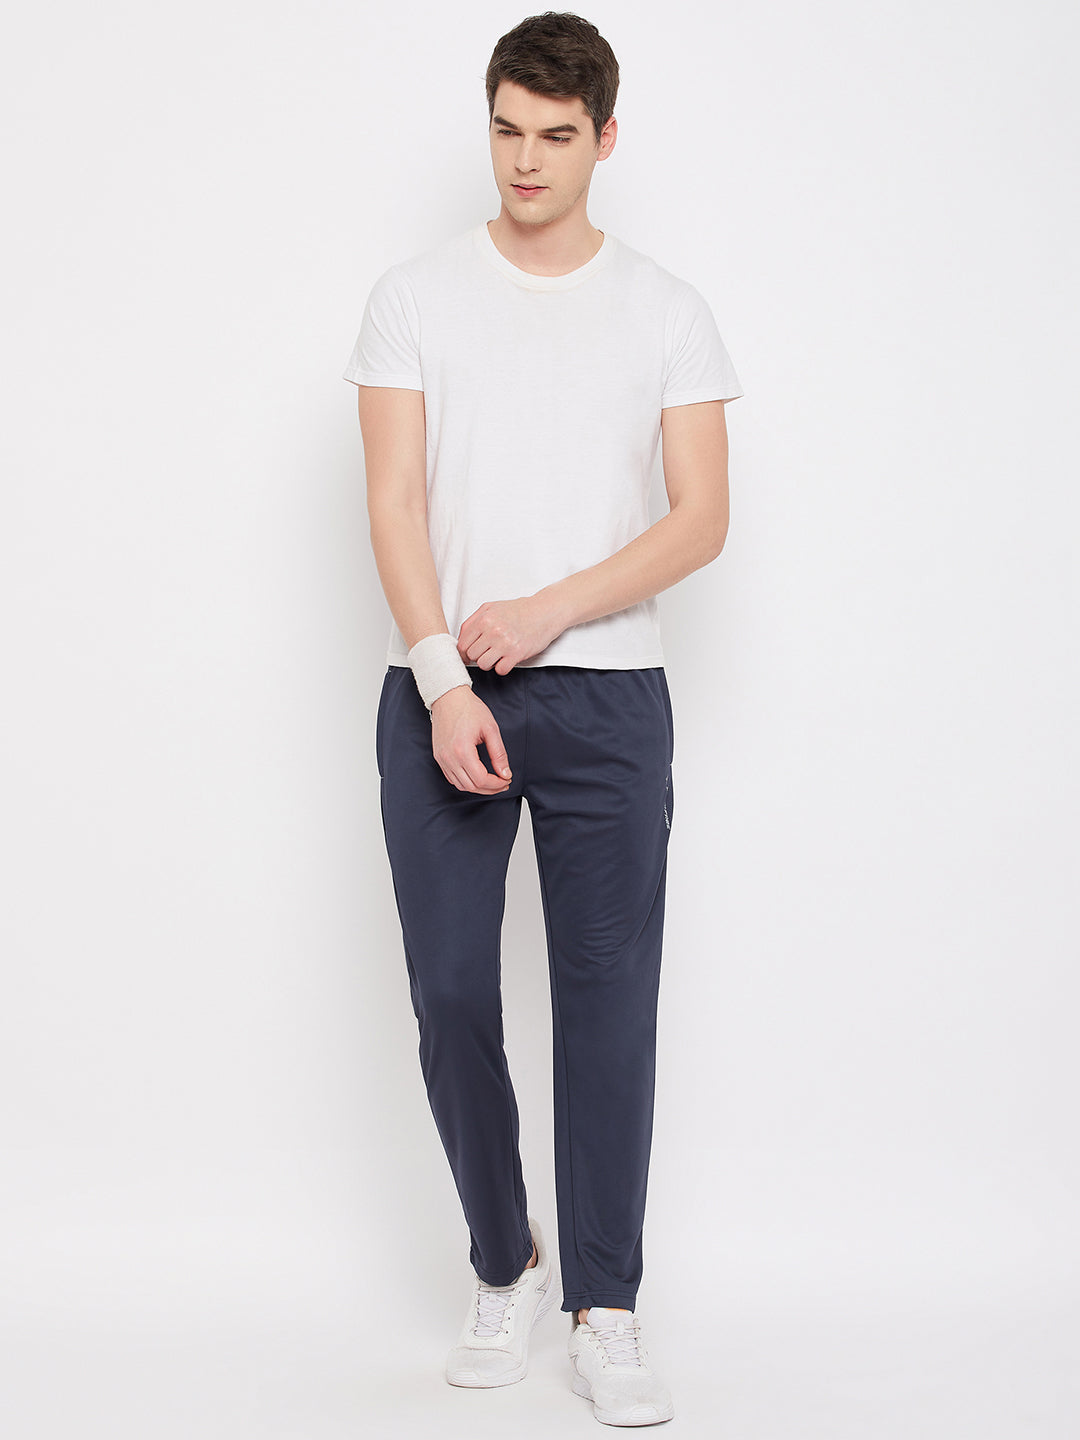 Neva Men's Track Pant in Solid Pattern Side pockets - Dark Grey